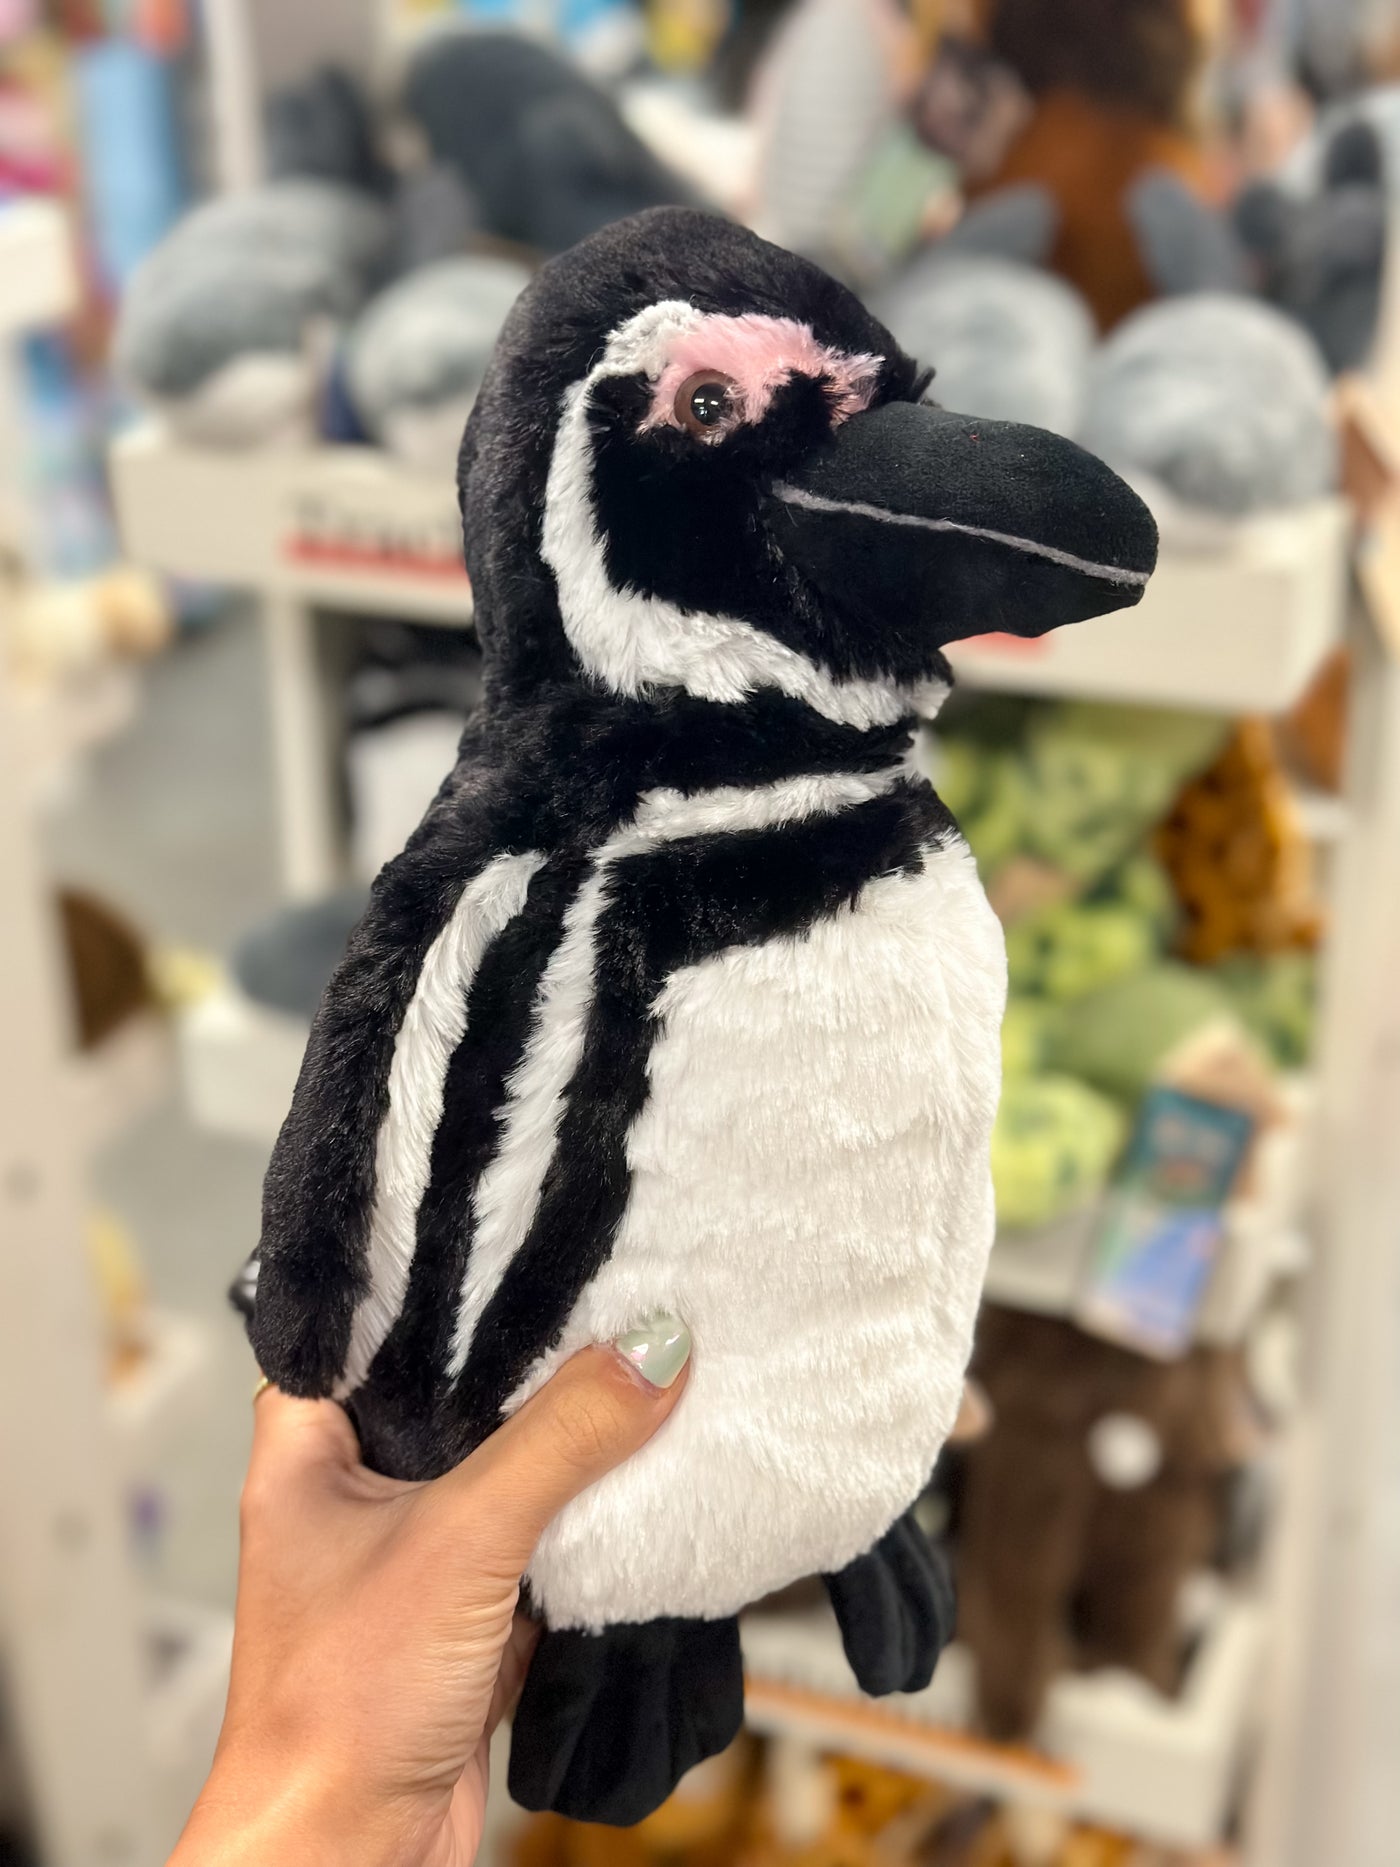 Fahlo The Passage Plush - Penguin